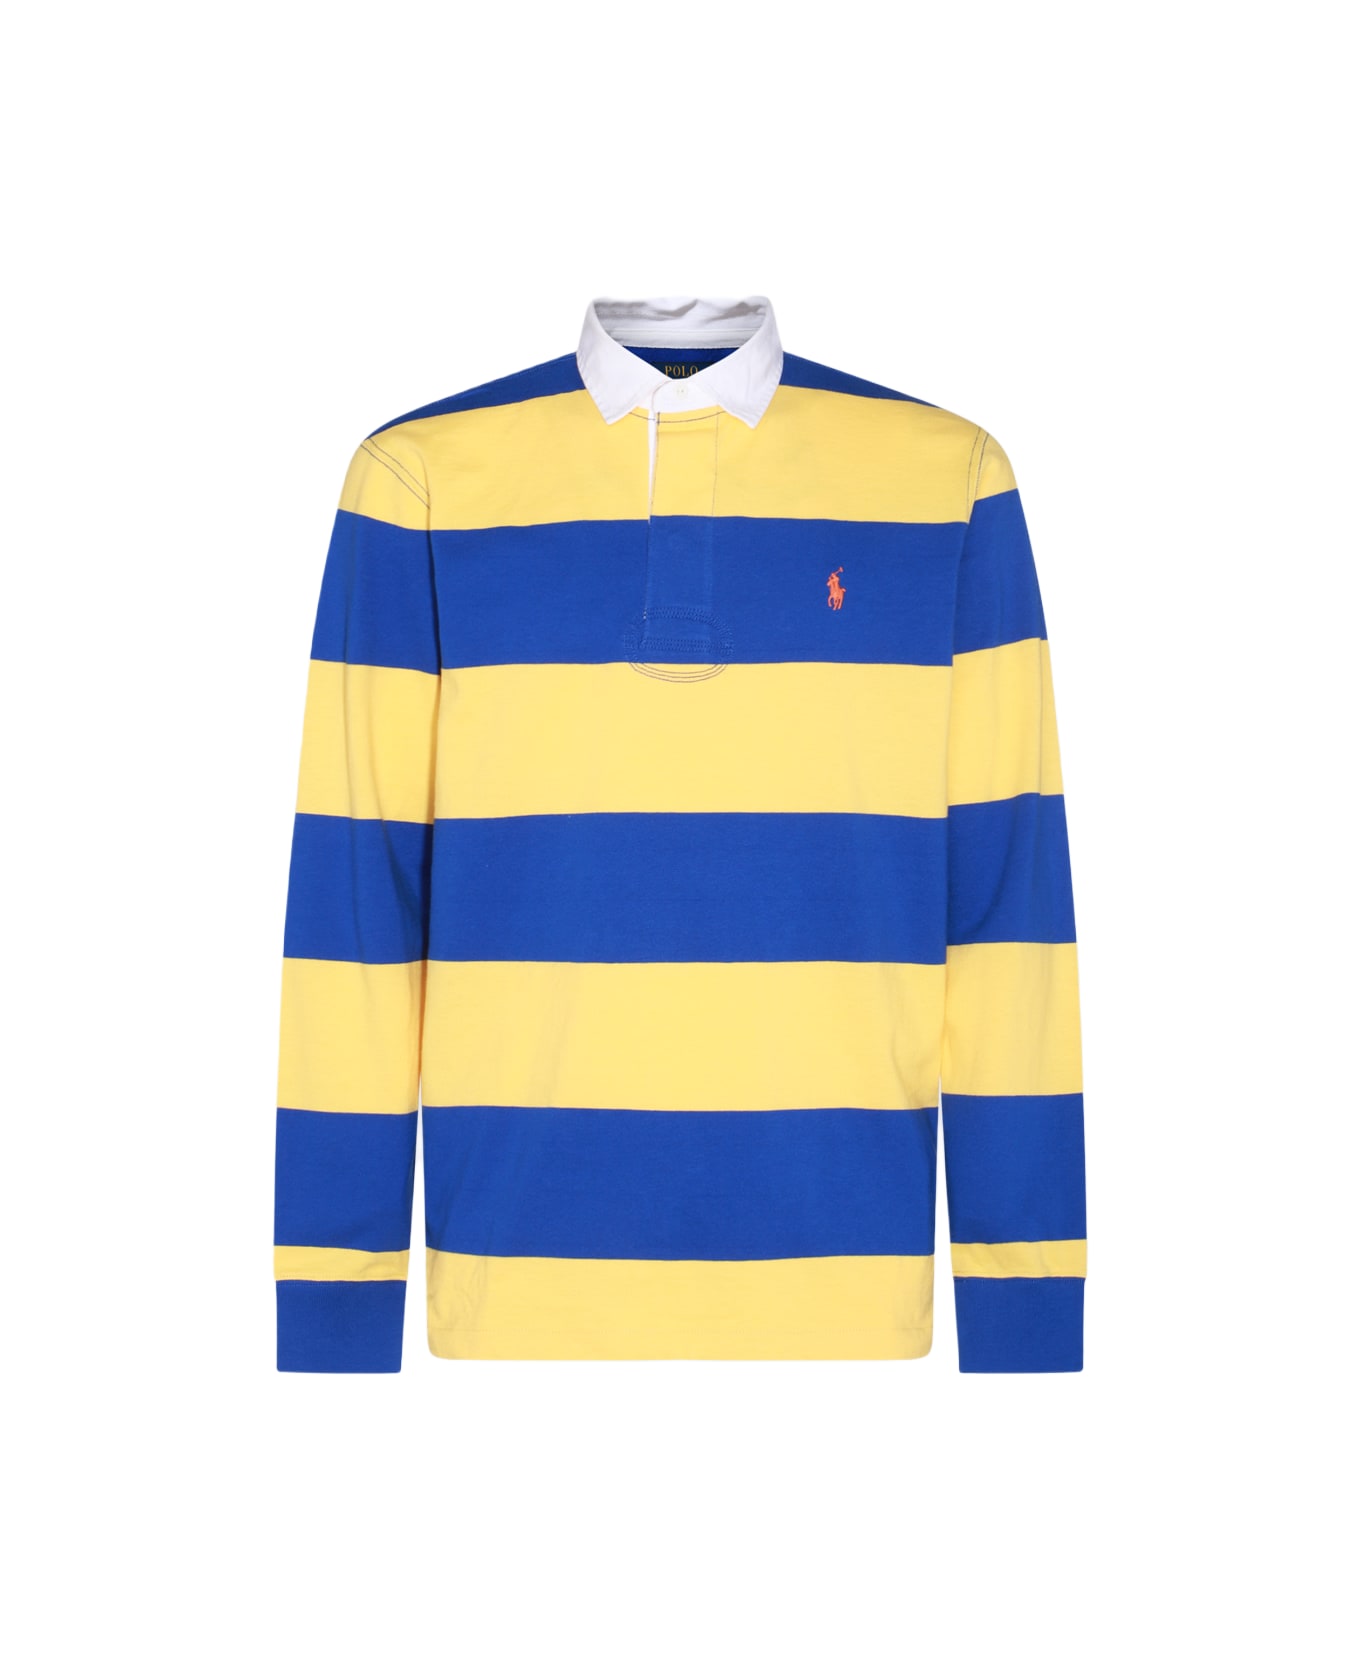 Polo Ralph Lauren Yellow And Blue Cotton Polo Shirt - CHROME YELLOW/CRUISE ROYAL